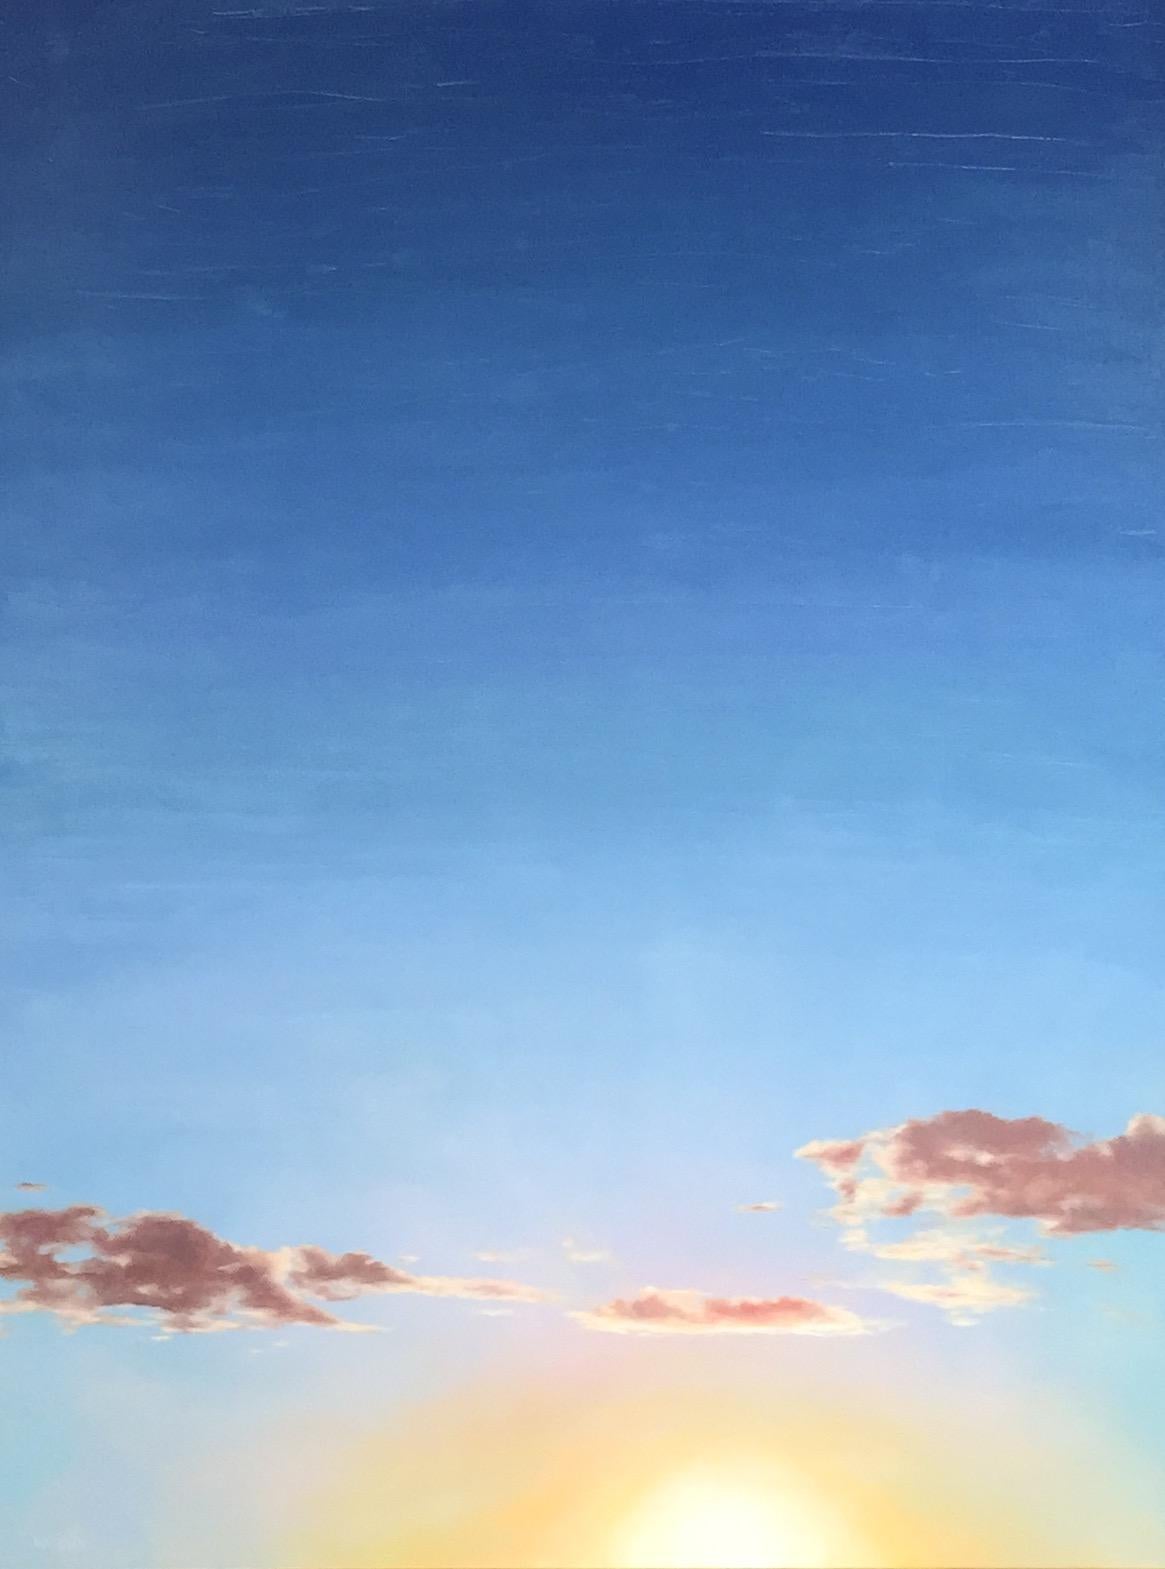 James Van Fossan Landscape Painting - "Sky 36" Oil Painting